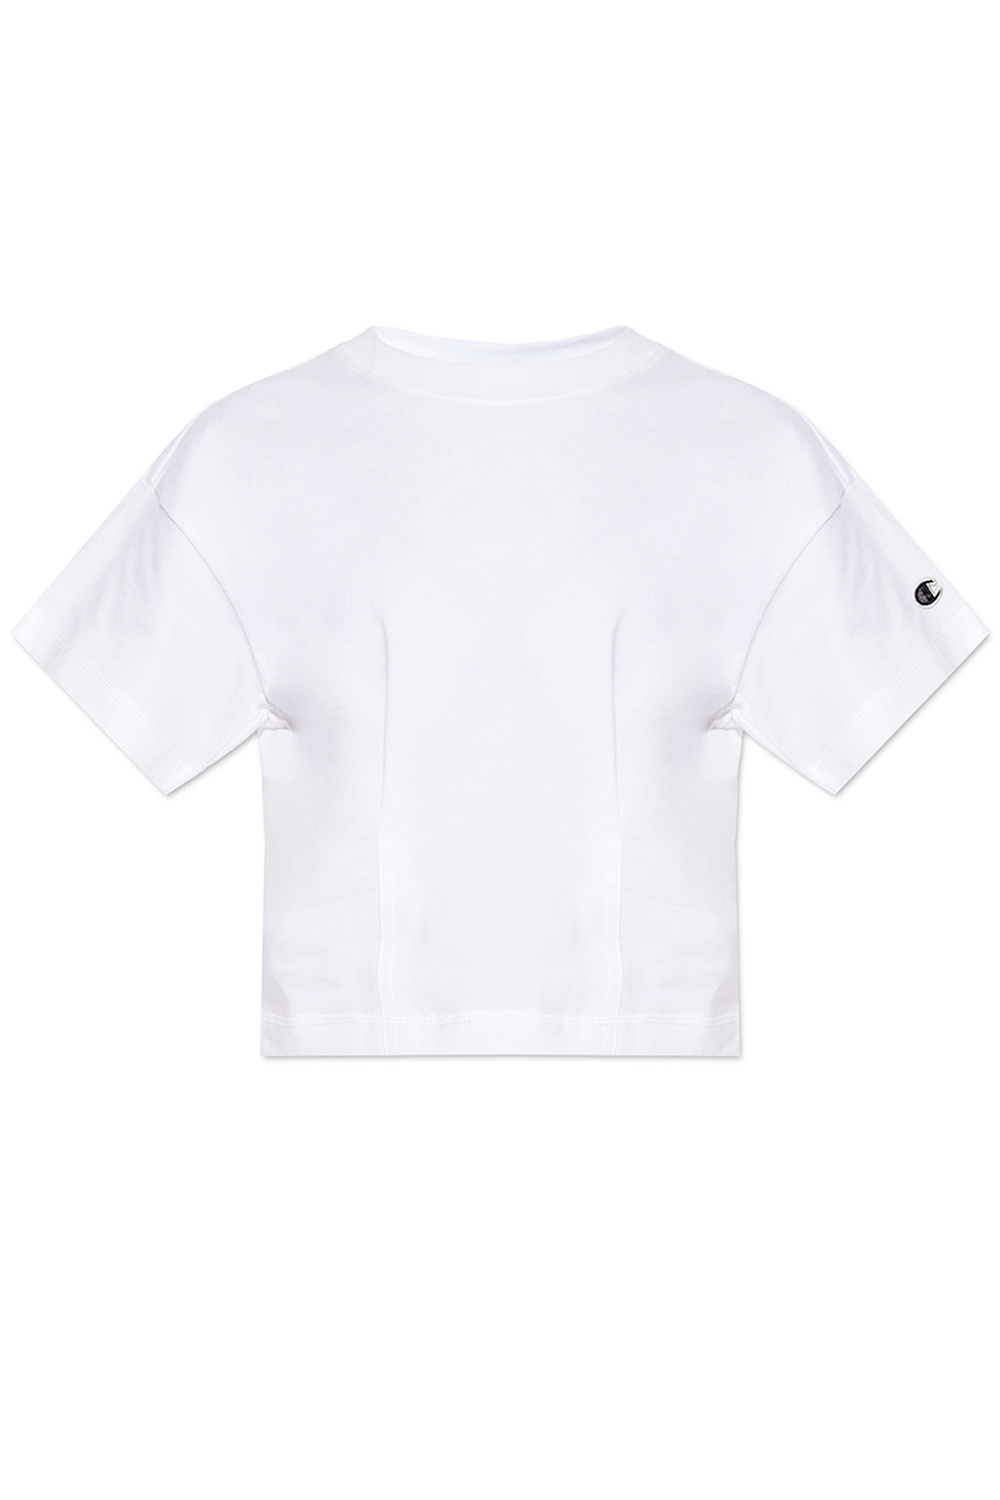 Germany neck - IetpShops - logo Sweater with crew Nude sweatshirt logo-print T shirt - Champion White